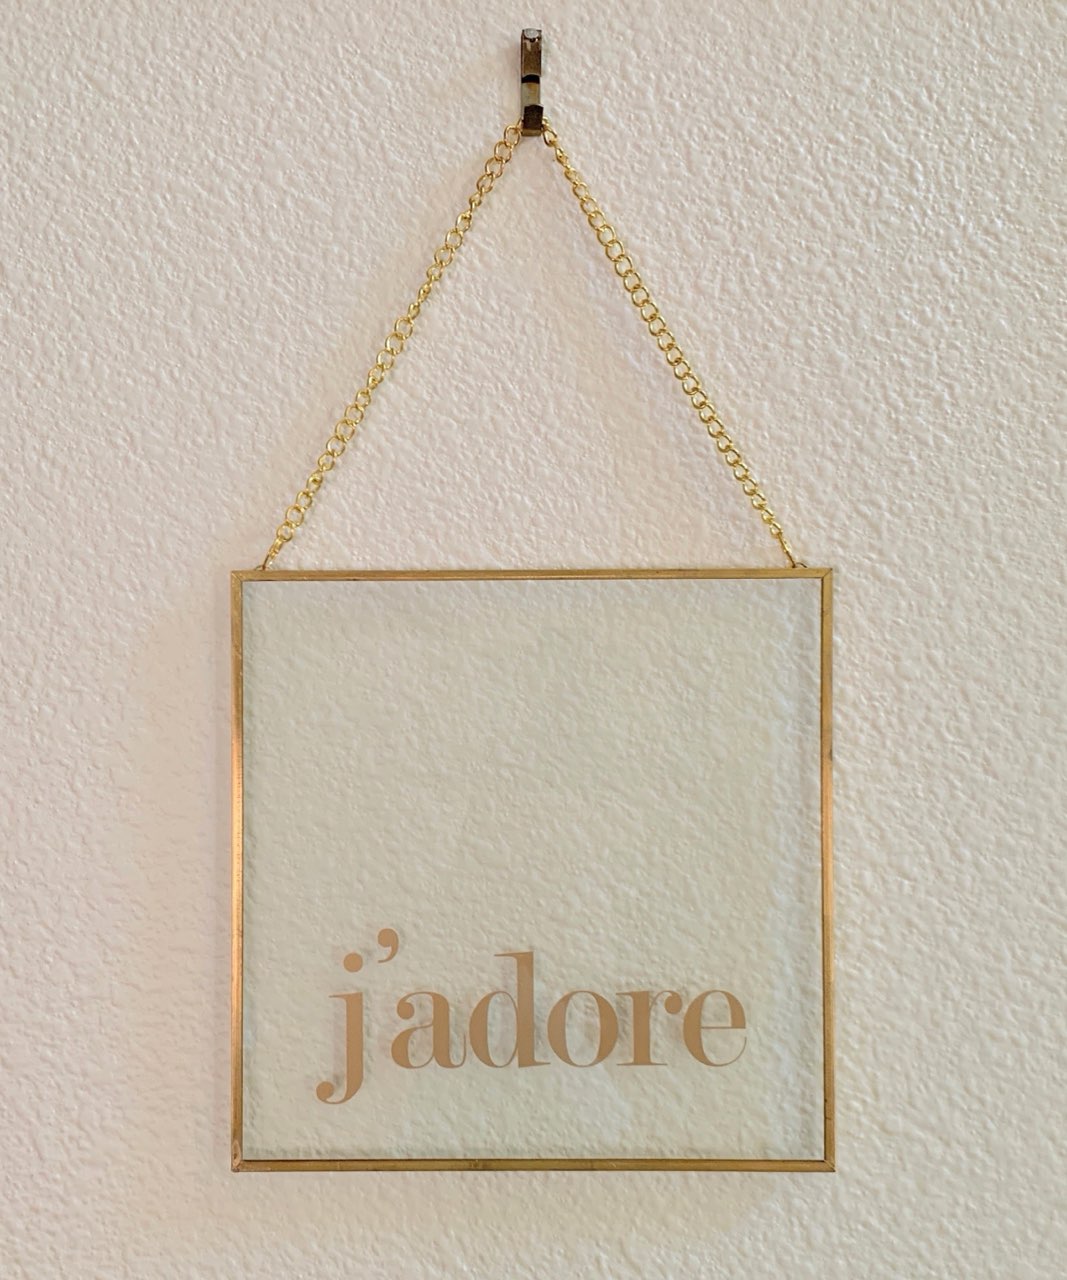 "J'adore" Glass Decorative Sign